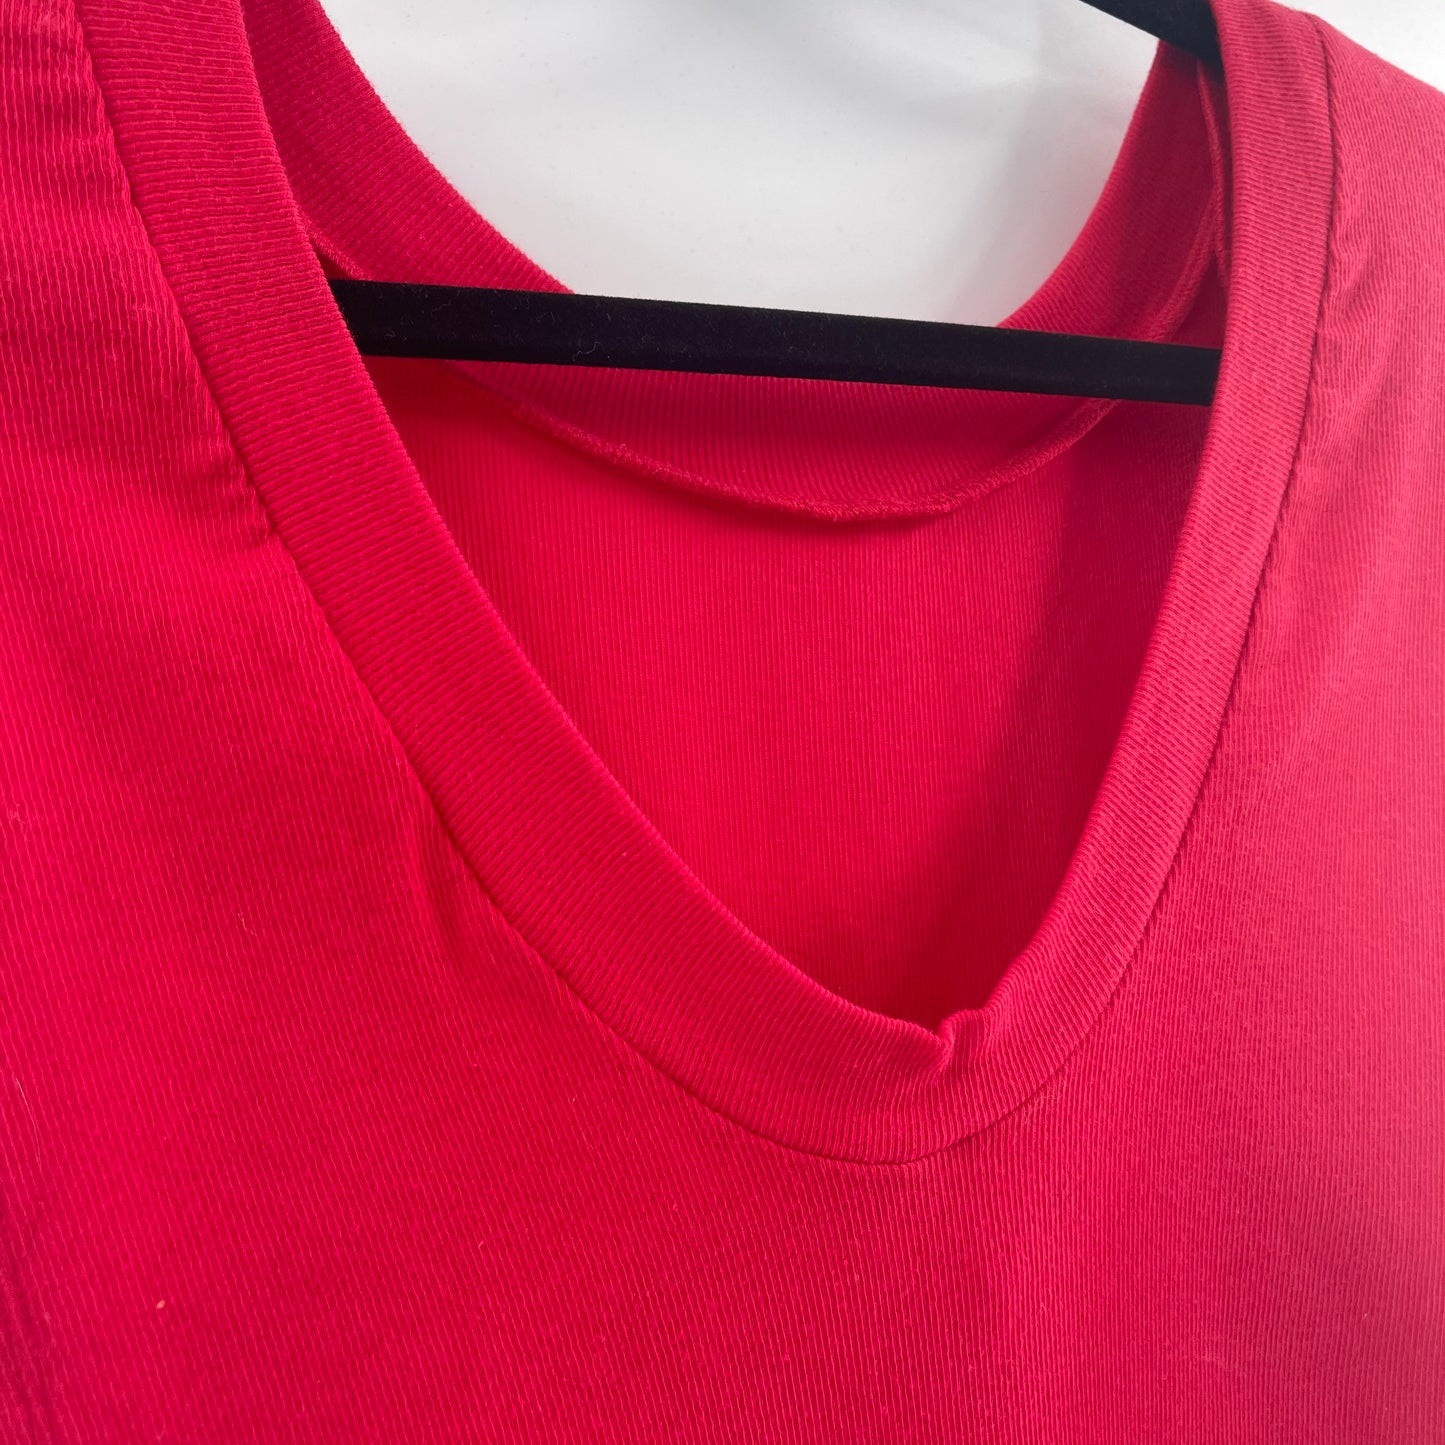 Intimately Free People “U” Shape Collar Red Bodysuit (Size XS)